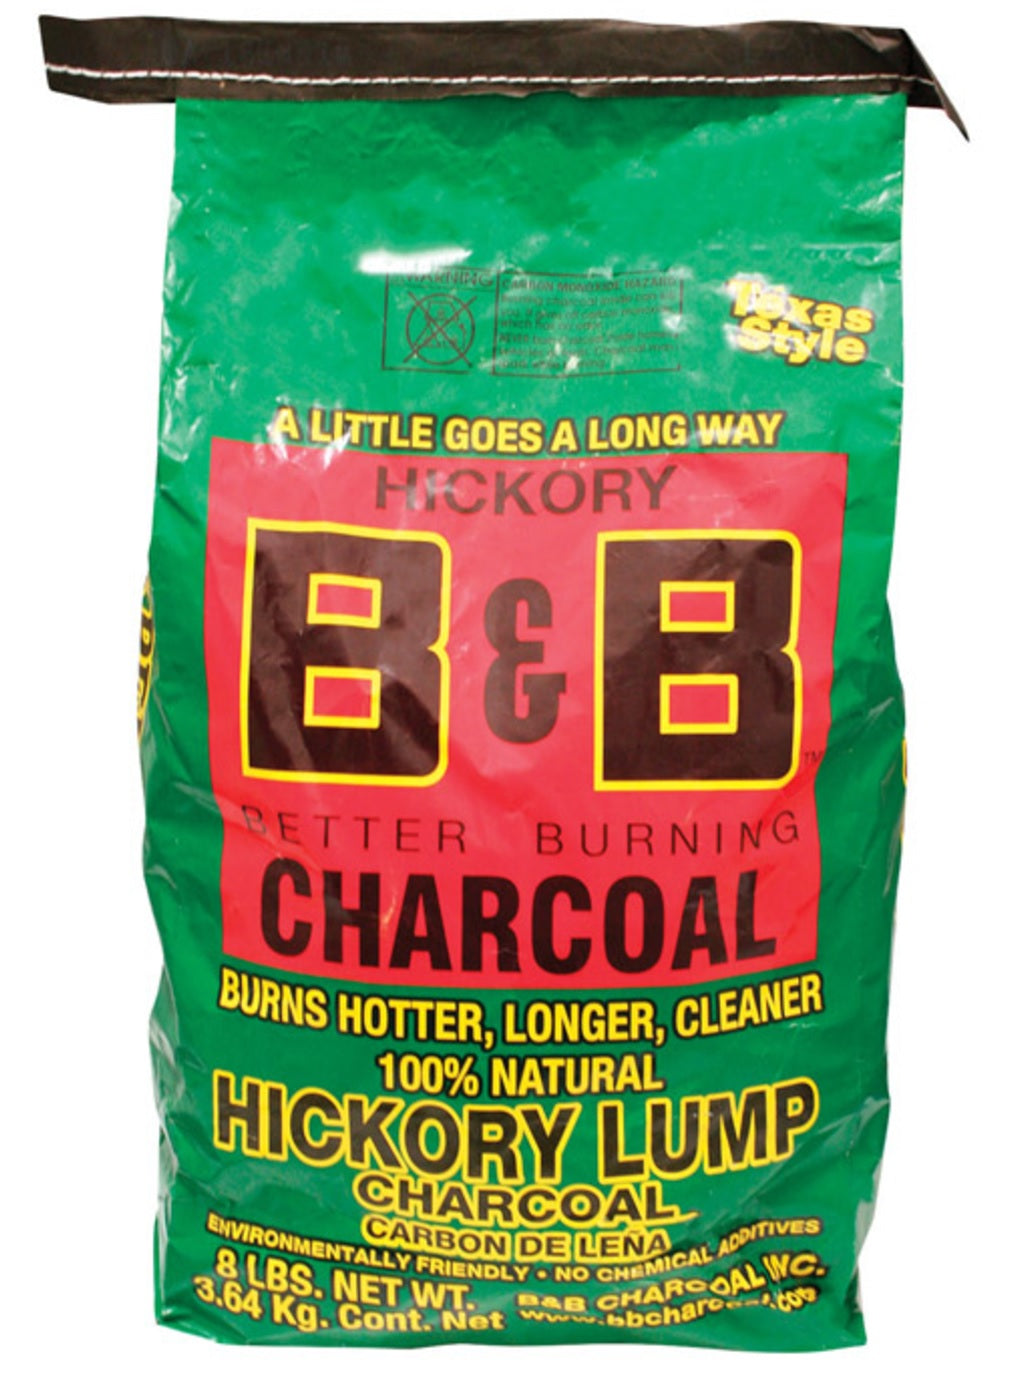 B & B Charcoal 00084 Organic Hickory Lump Charcoal, 8 Lbs